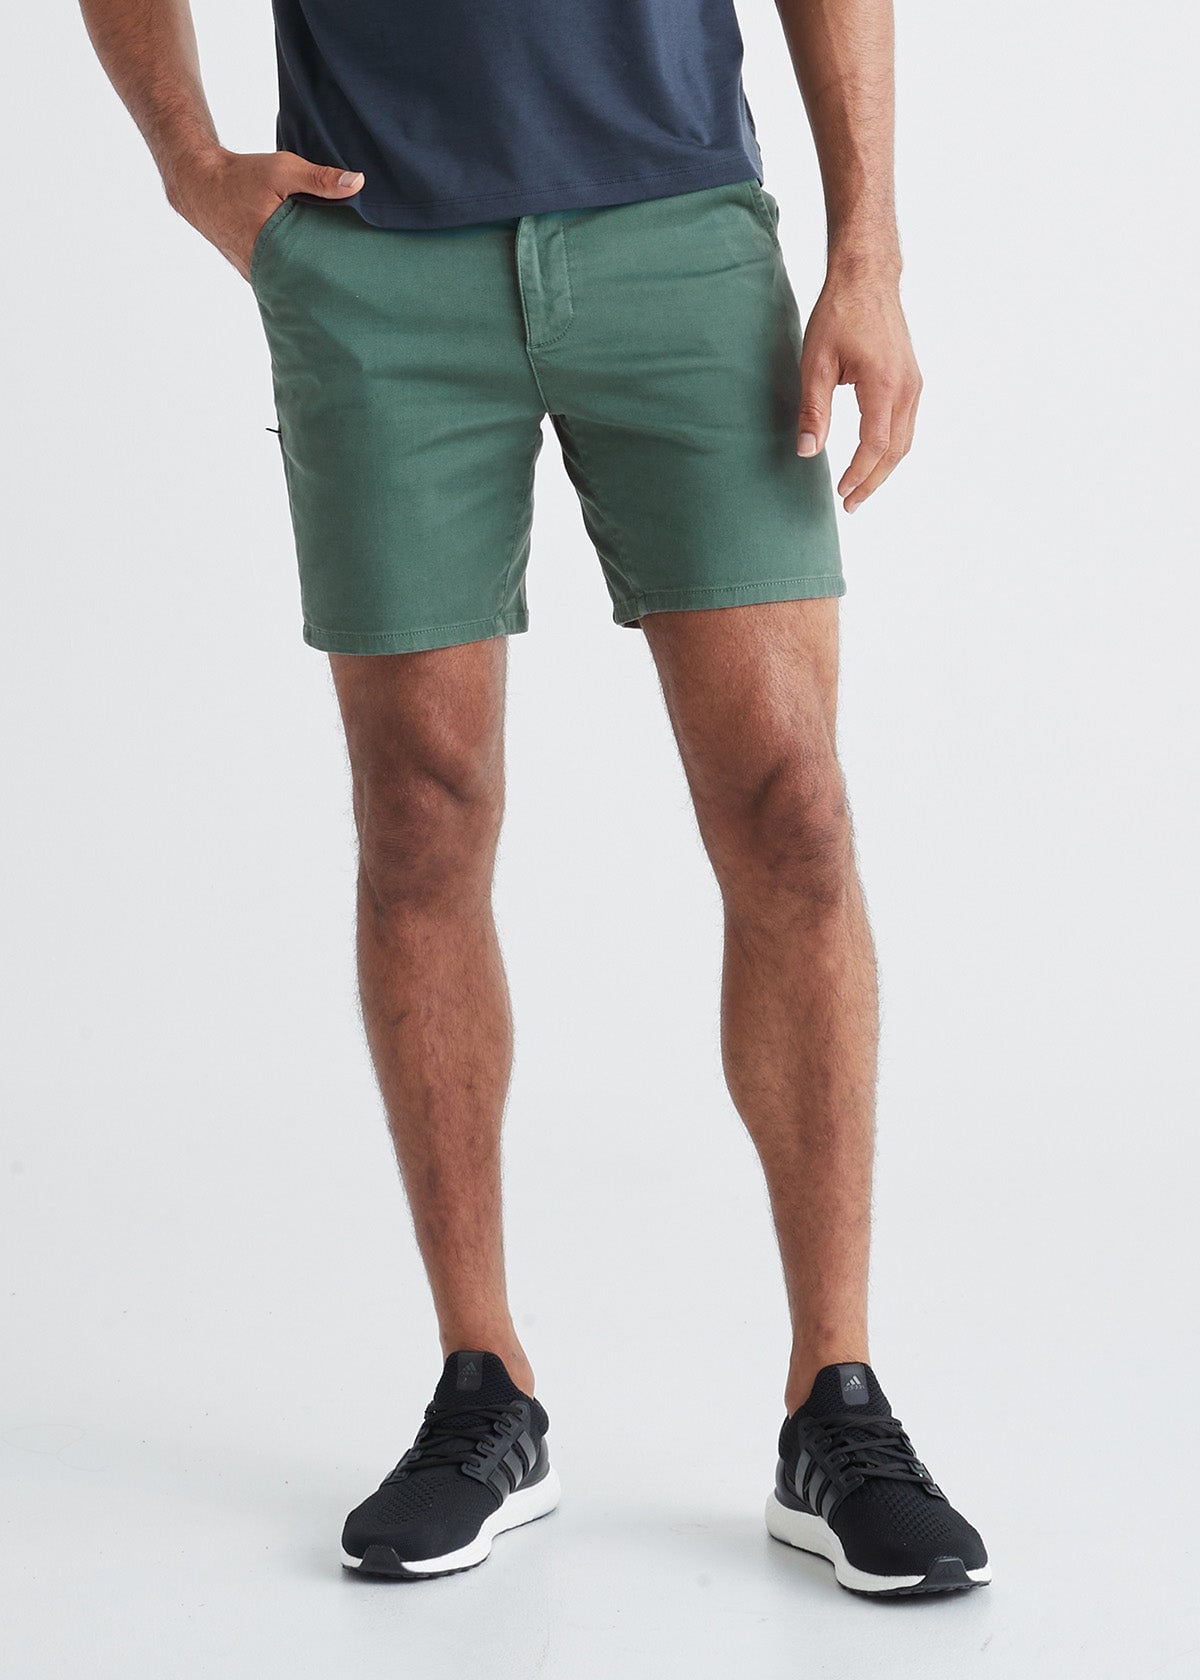 mens green lightweight shorts slim fit front